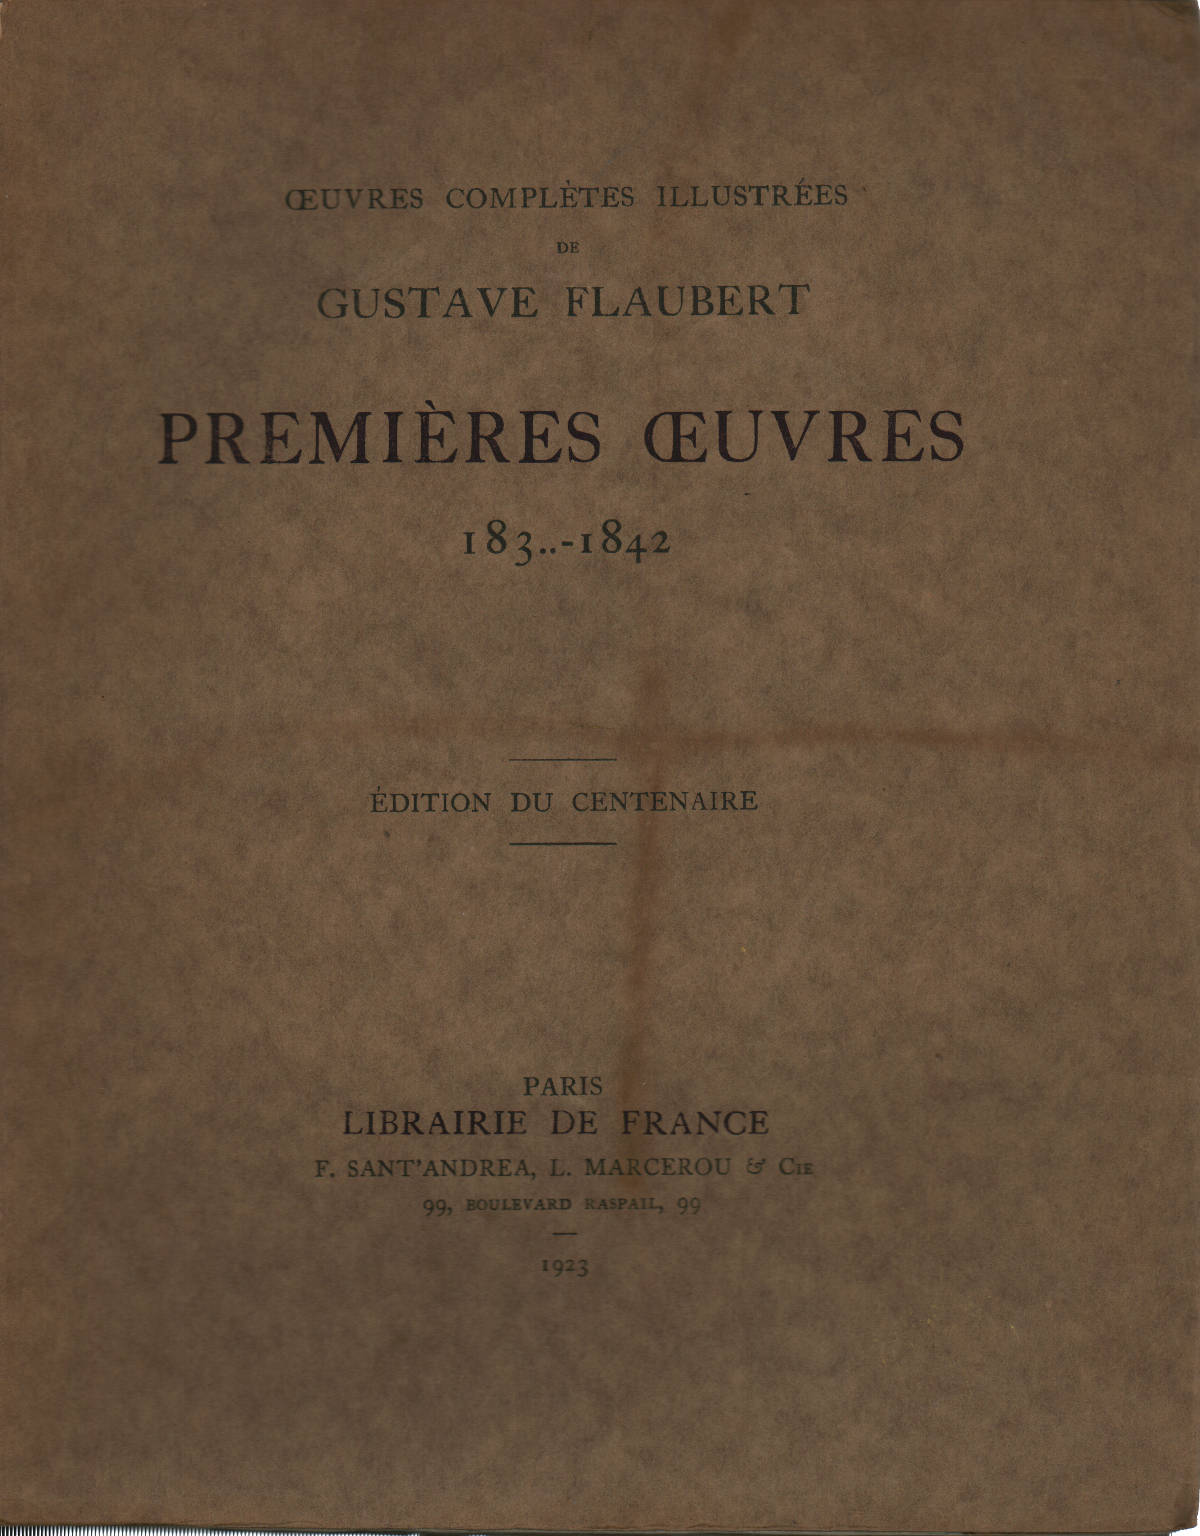 Premiéres Oeuvres, Gustave Flaubert